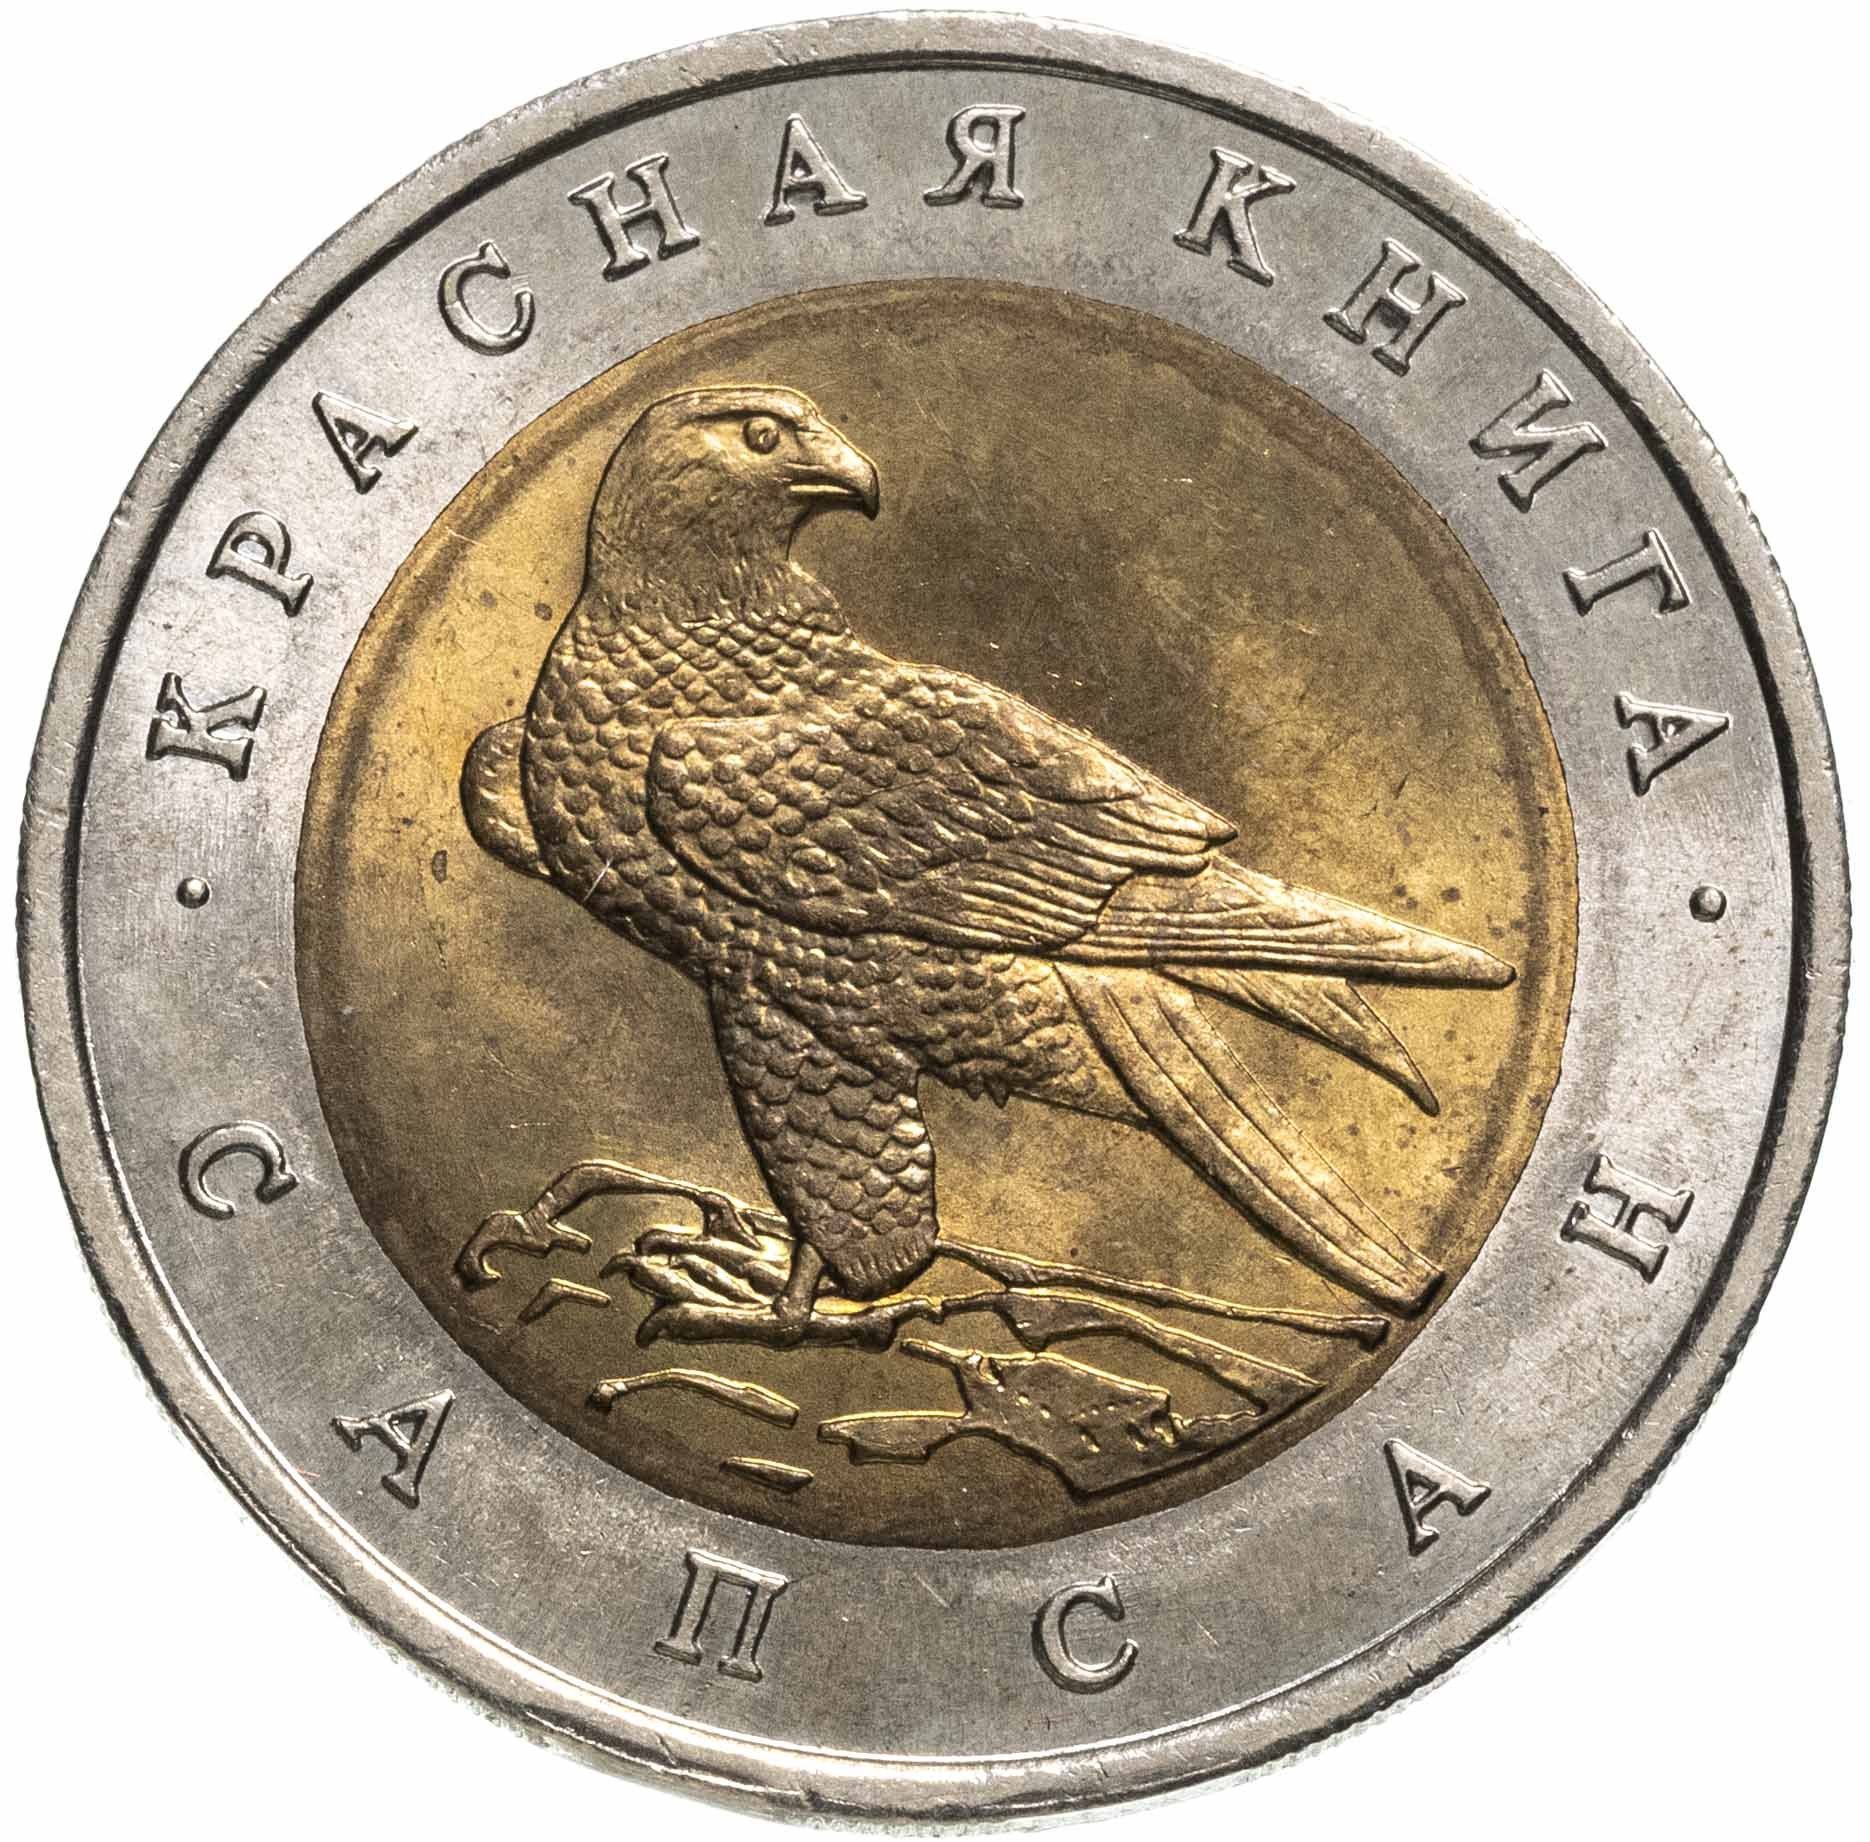 Монета 1994 года. Монета Сапсан. Красная книга Сапсан монета. Монета с птицей. Монета 50 рублей.